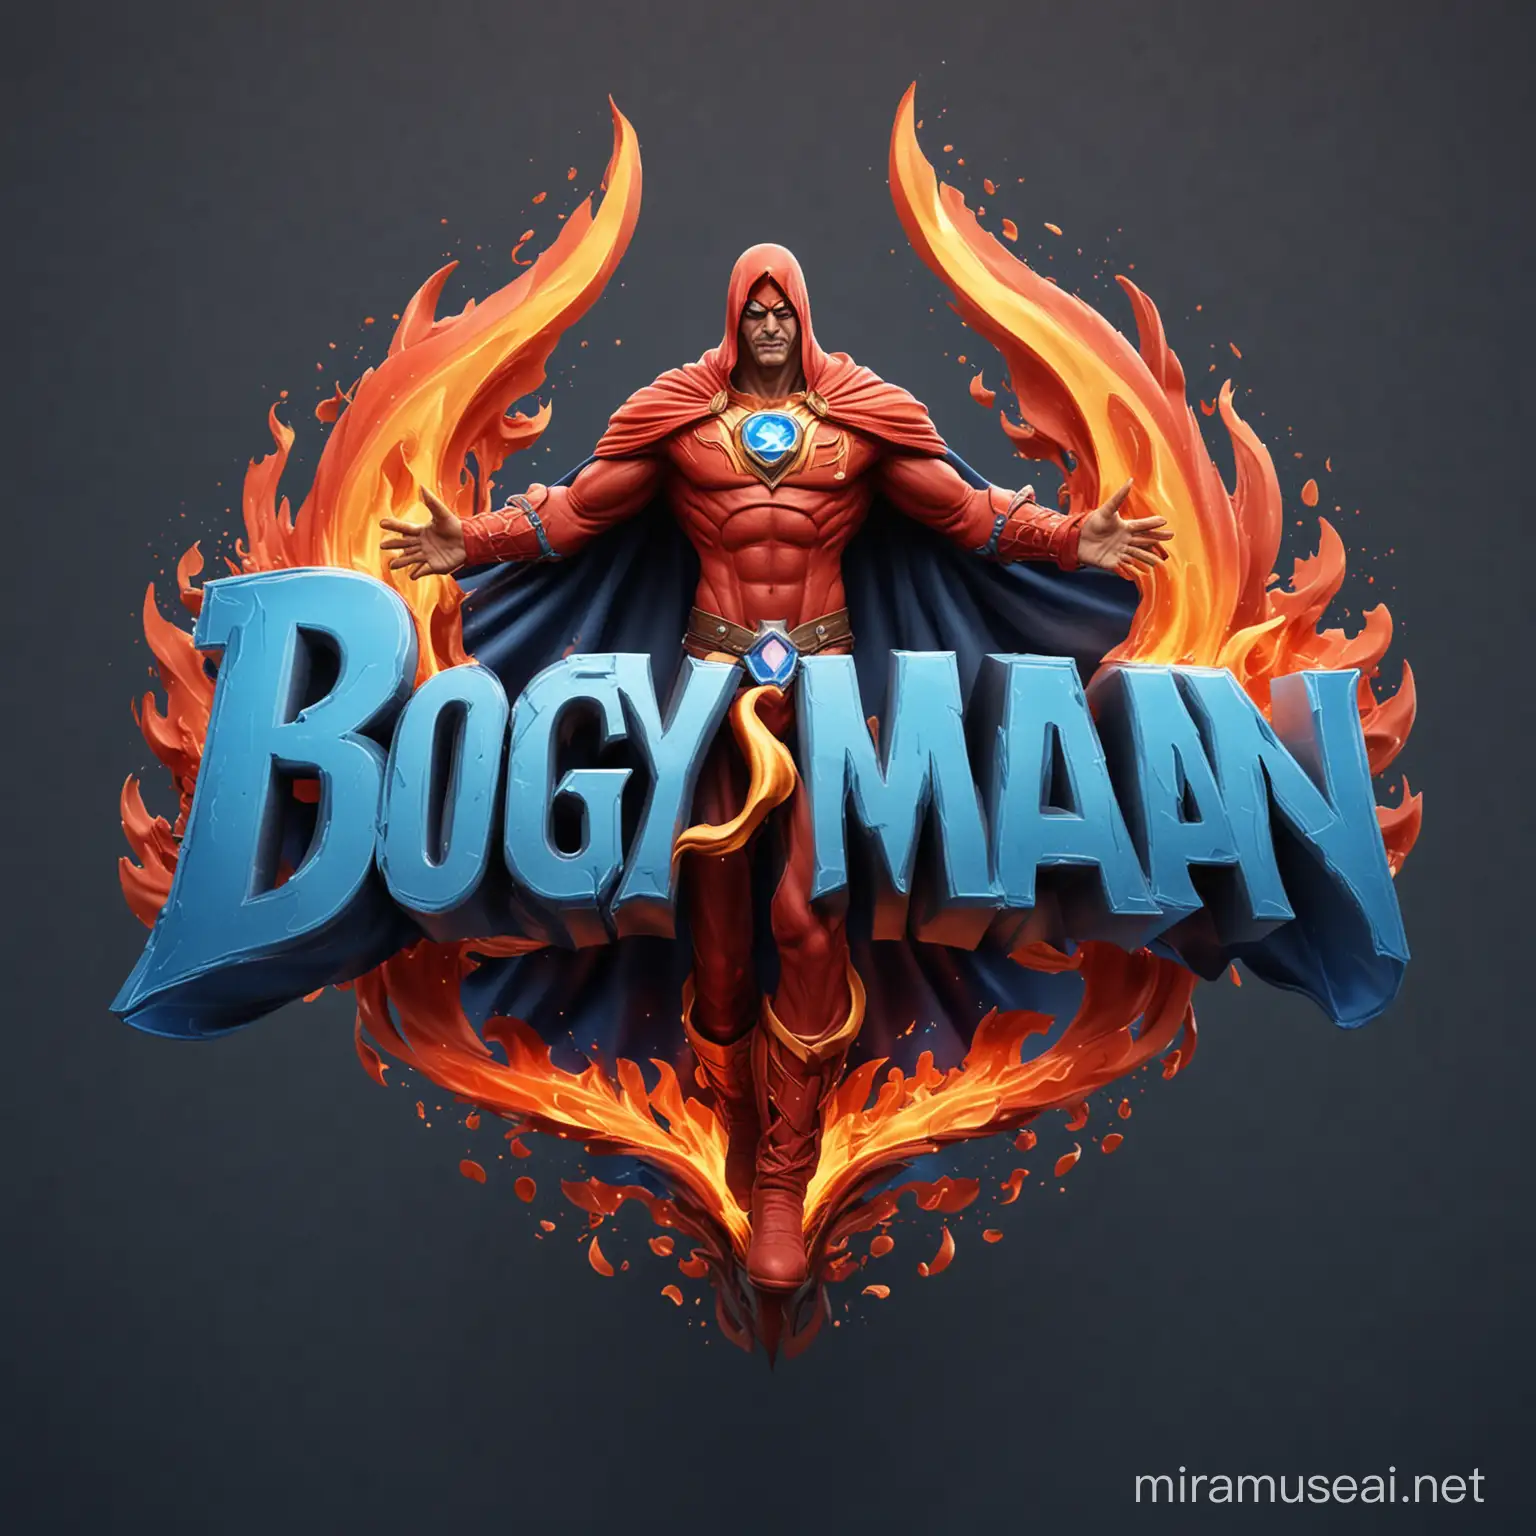 Bogyman Logo Fiery Superhero with Flaming Cape